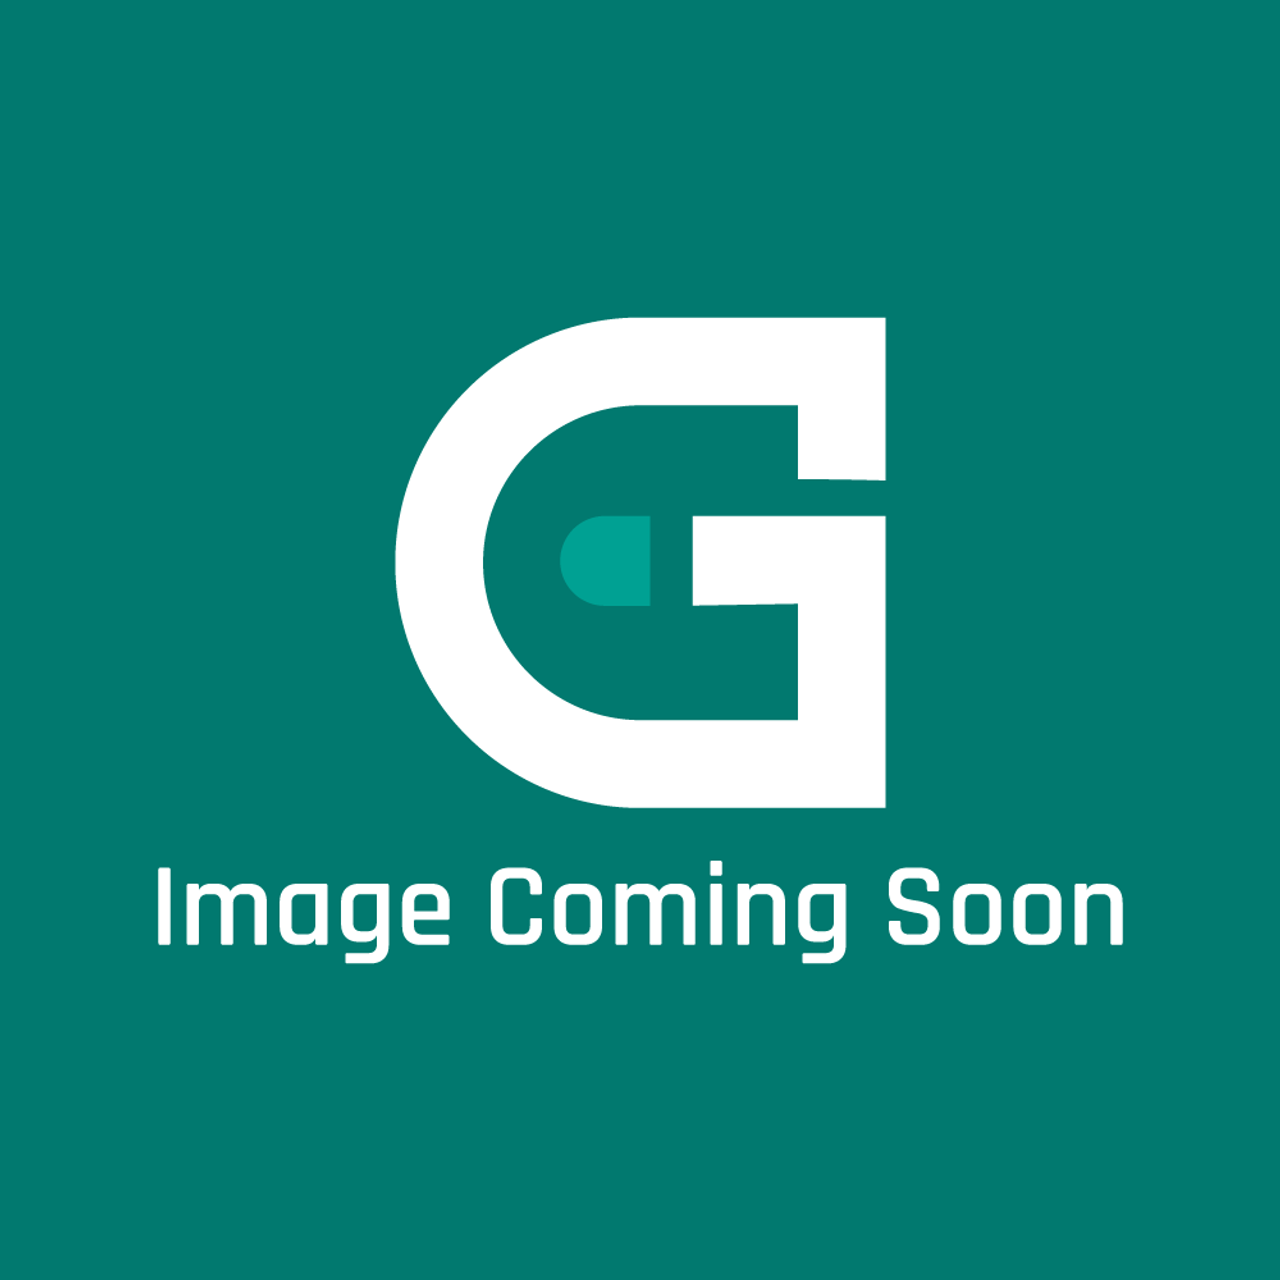 Viking G32015257CH - 30" DOOR ASSY *CH* (VEWD103) - Image Coming Soon!